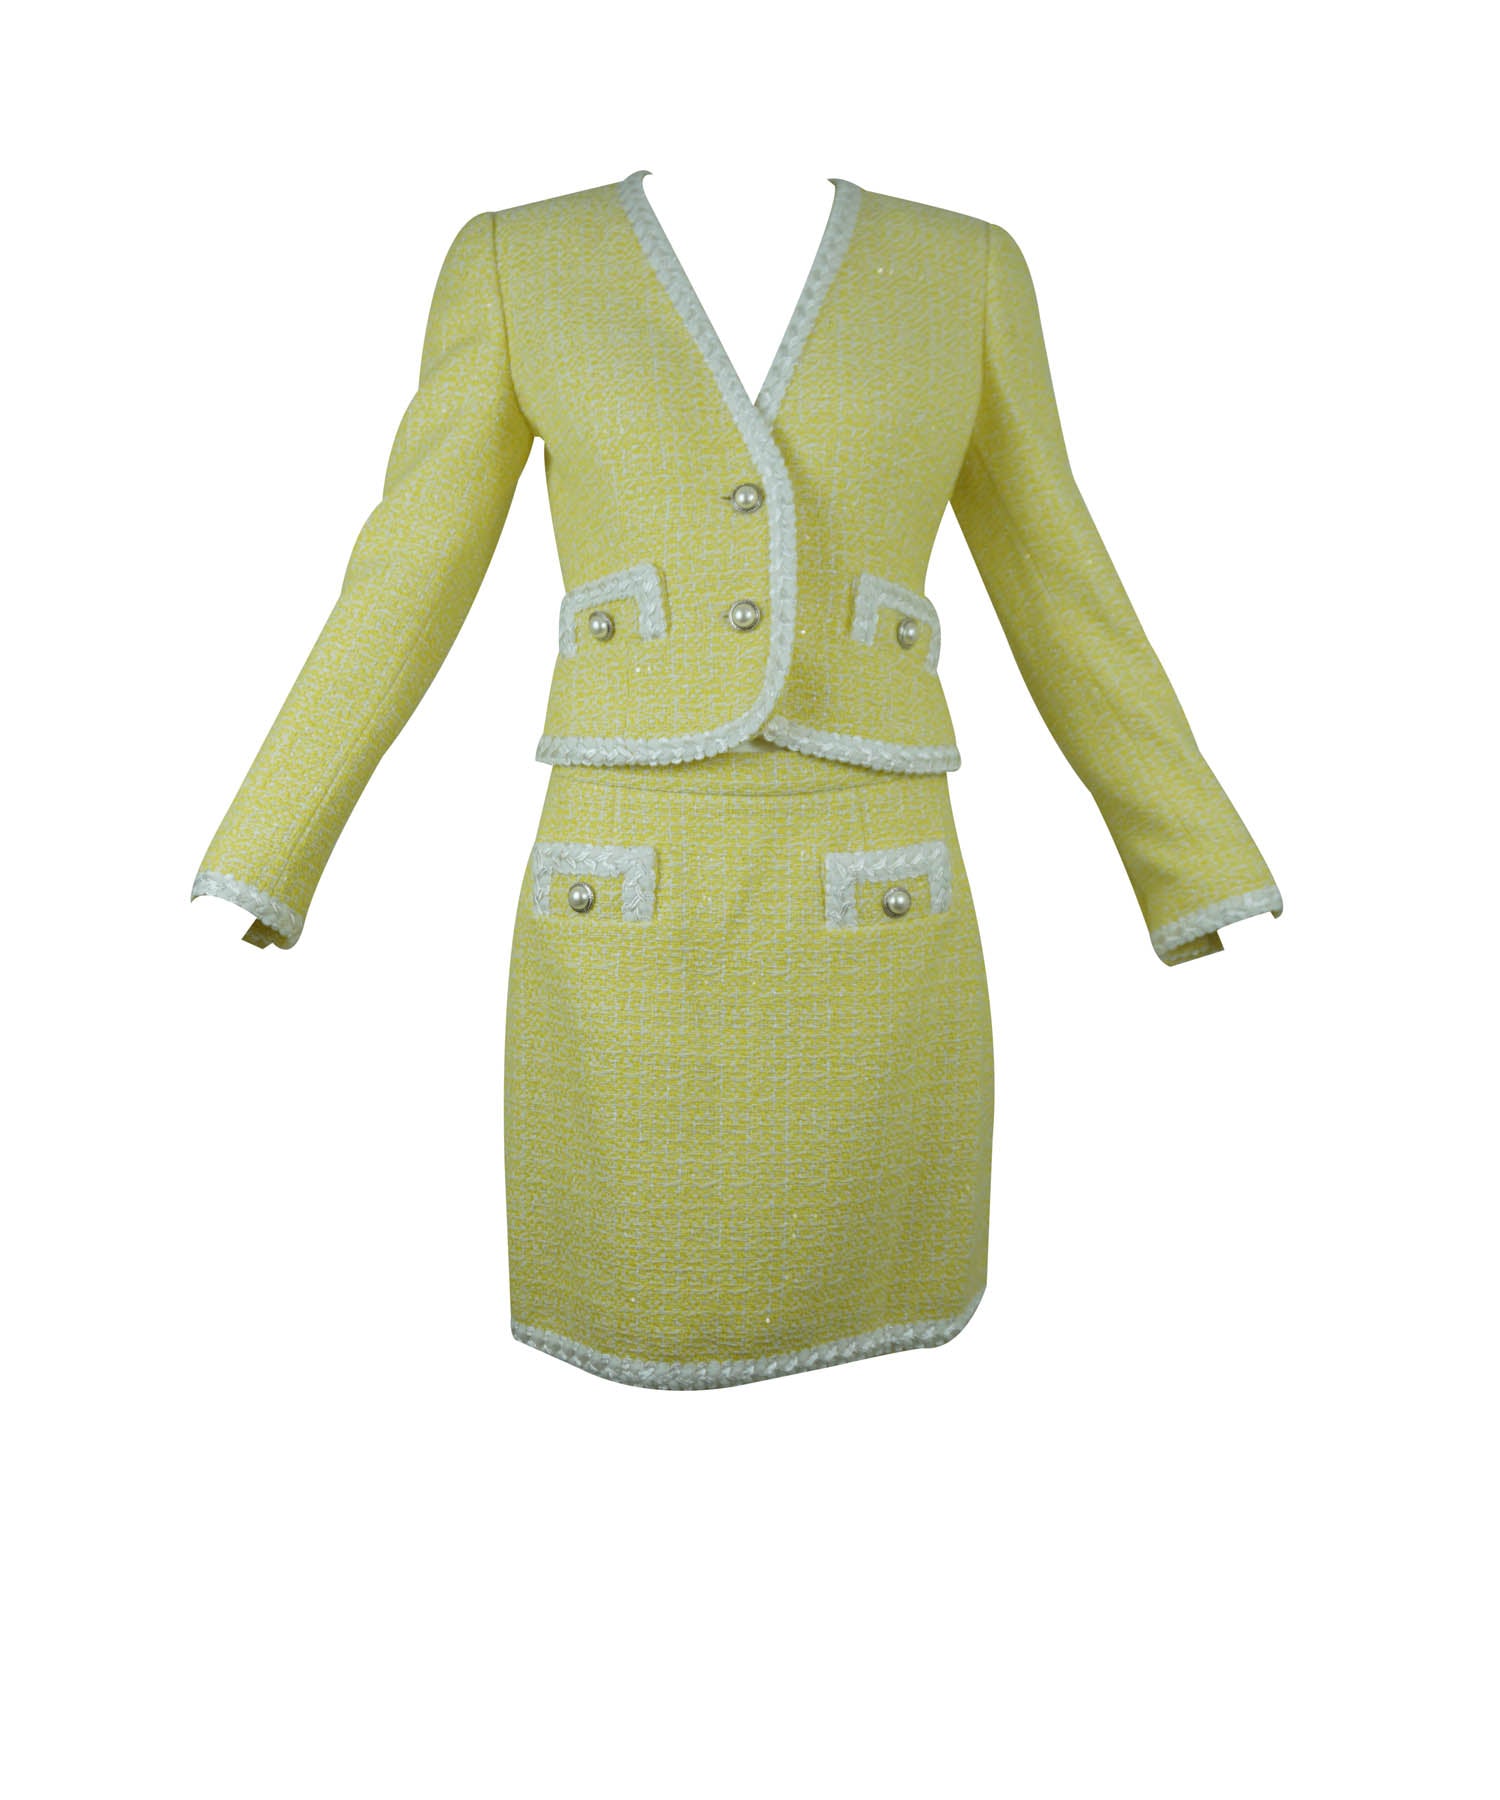 CHANEL Women's Tweed Knit Mini Dress Size 40 (Pink/Blue/Orange/Gold)